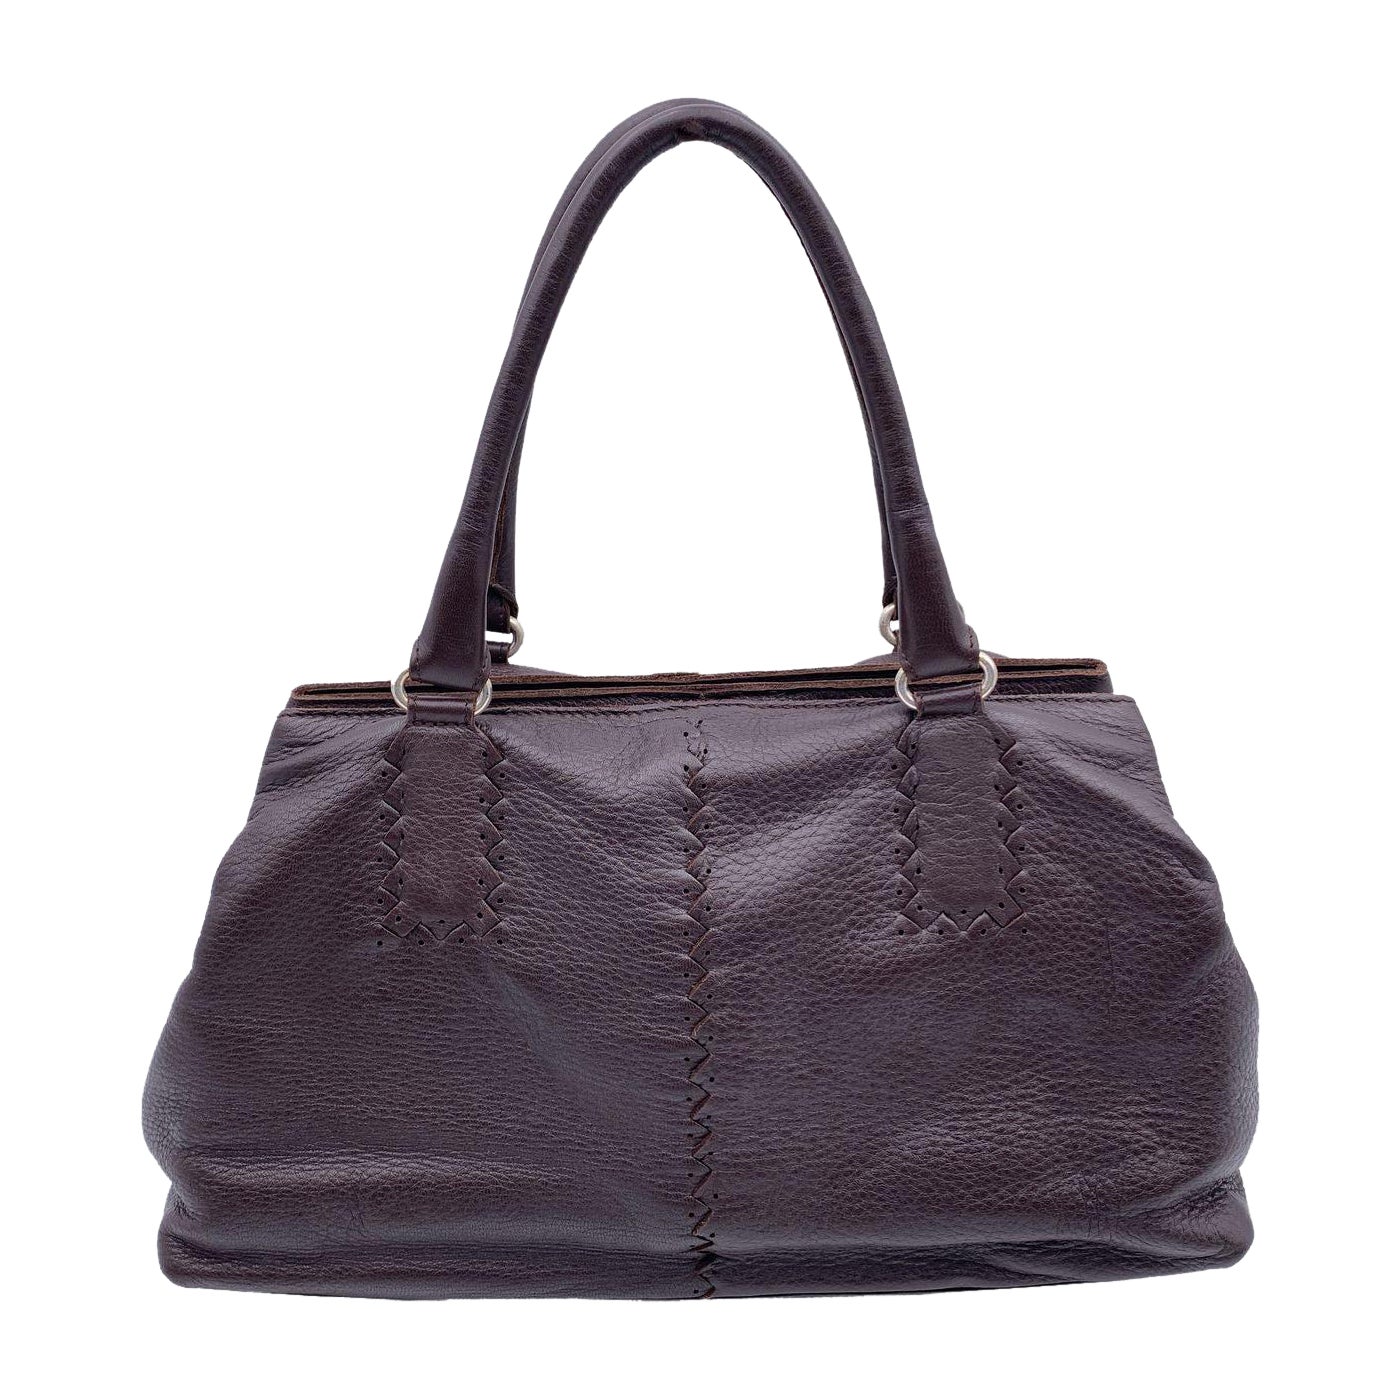 Bottega Veneta Brown Leather Intrecciato Detail Tote Bag Handbag For Sale